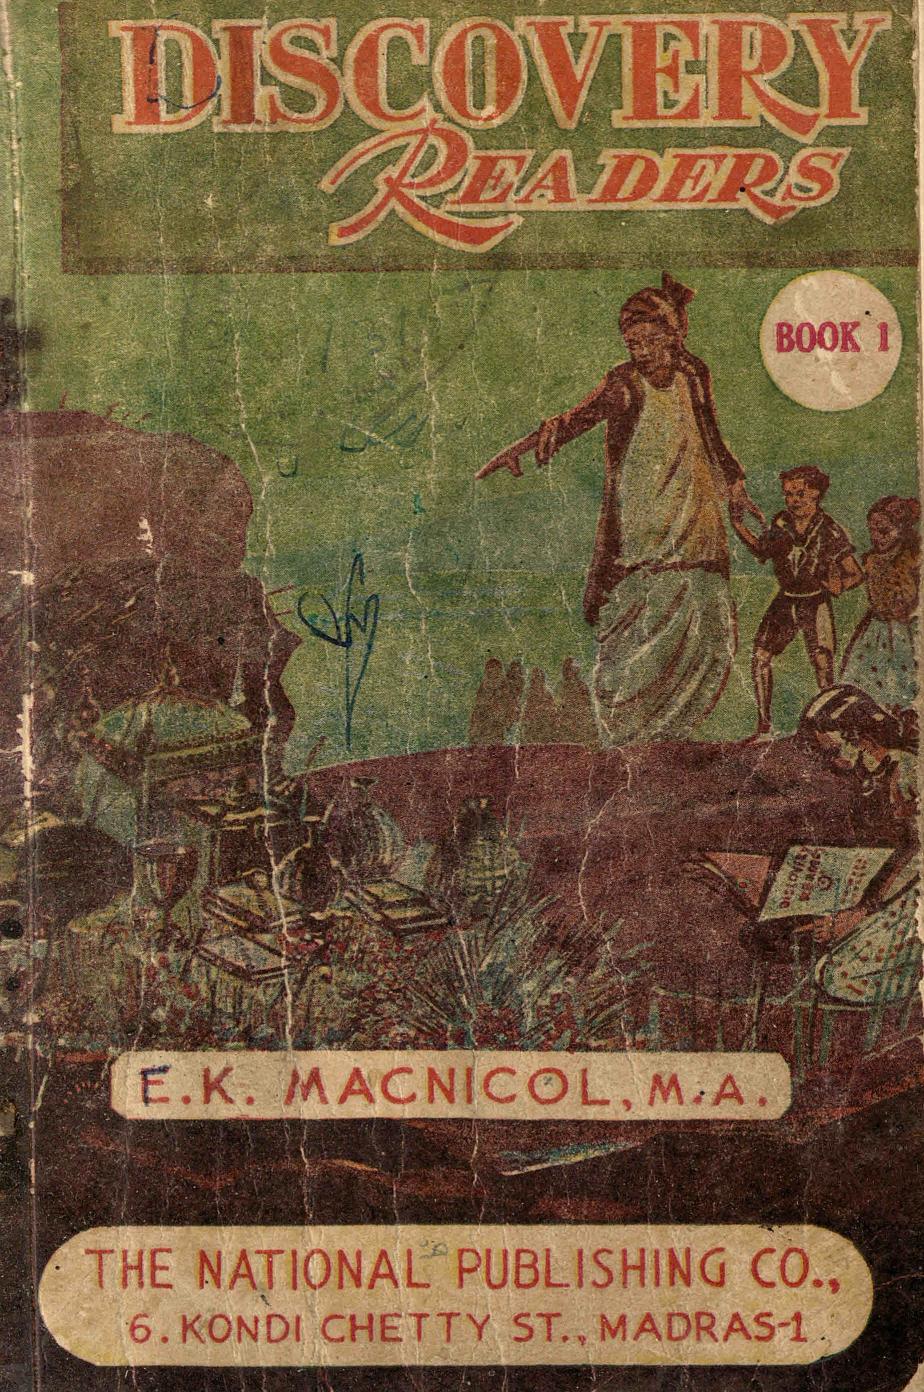 1950 - Discovery Readers Book 01 - E. K Mancicol